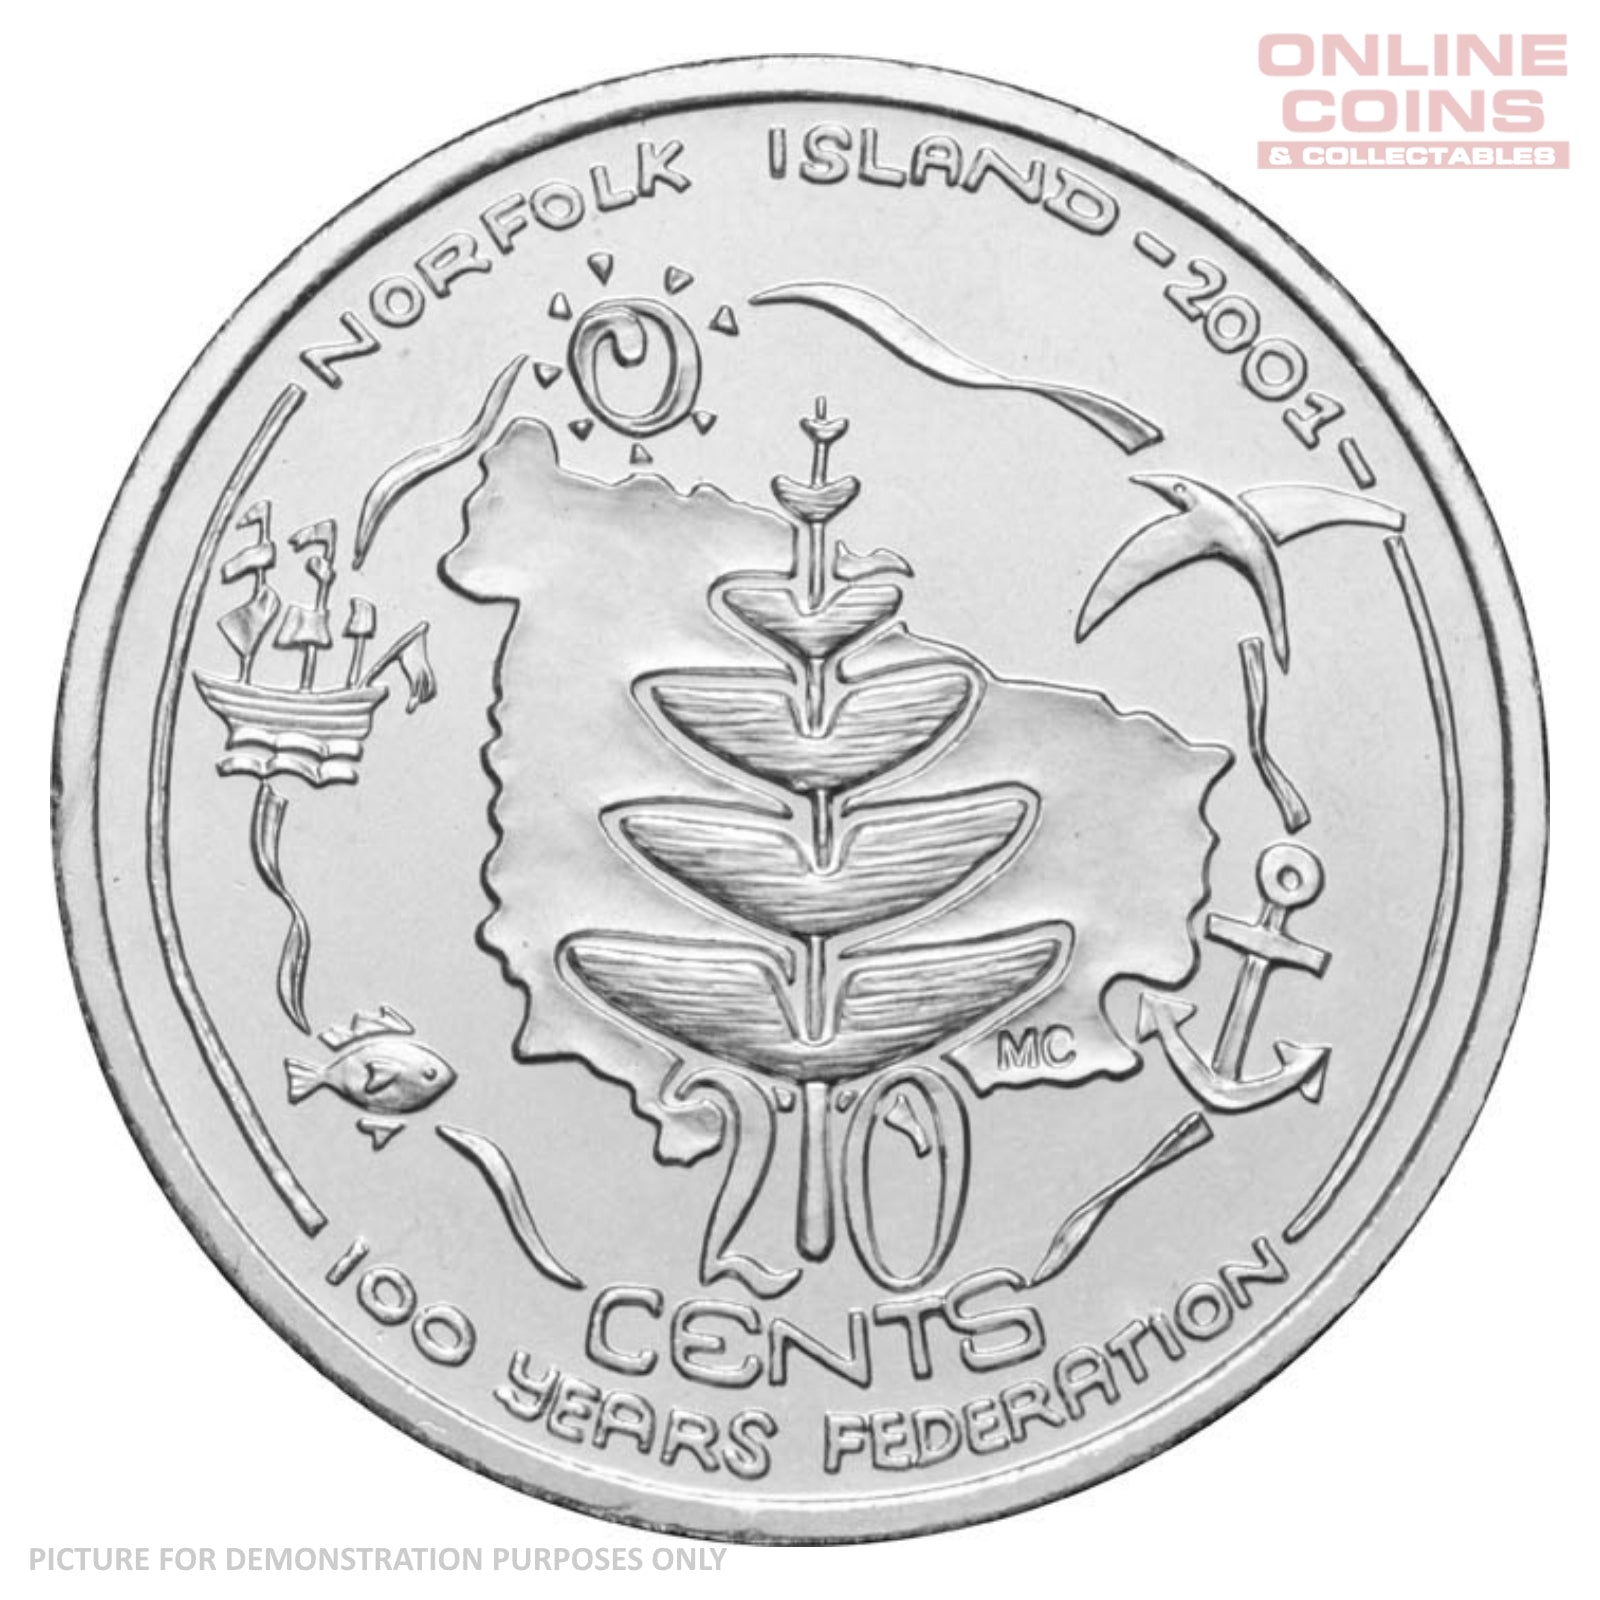 2001 RAM Centenary of Federation 20c Circulating Coin - NORFOLK ISLAND